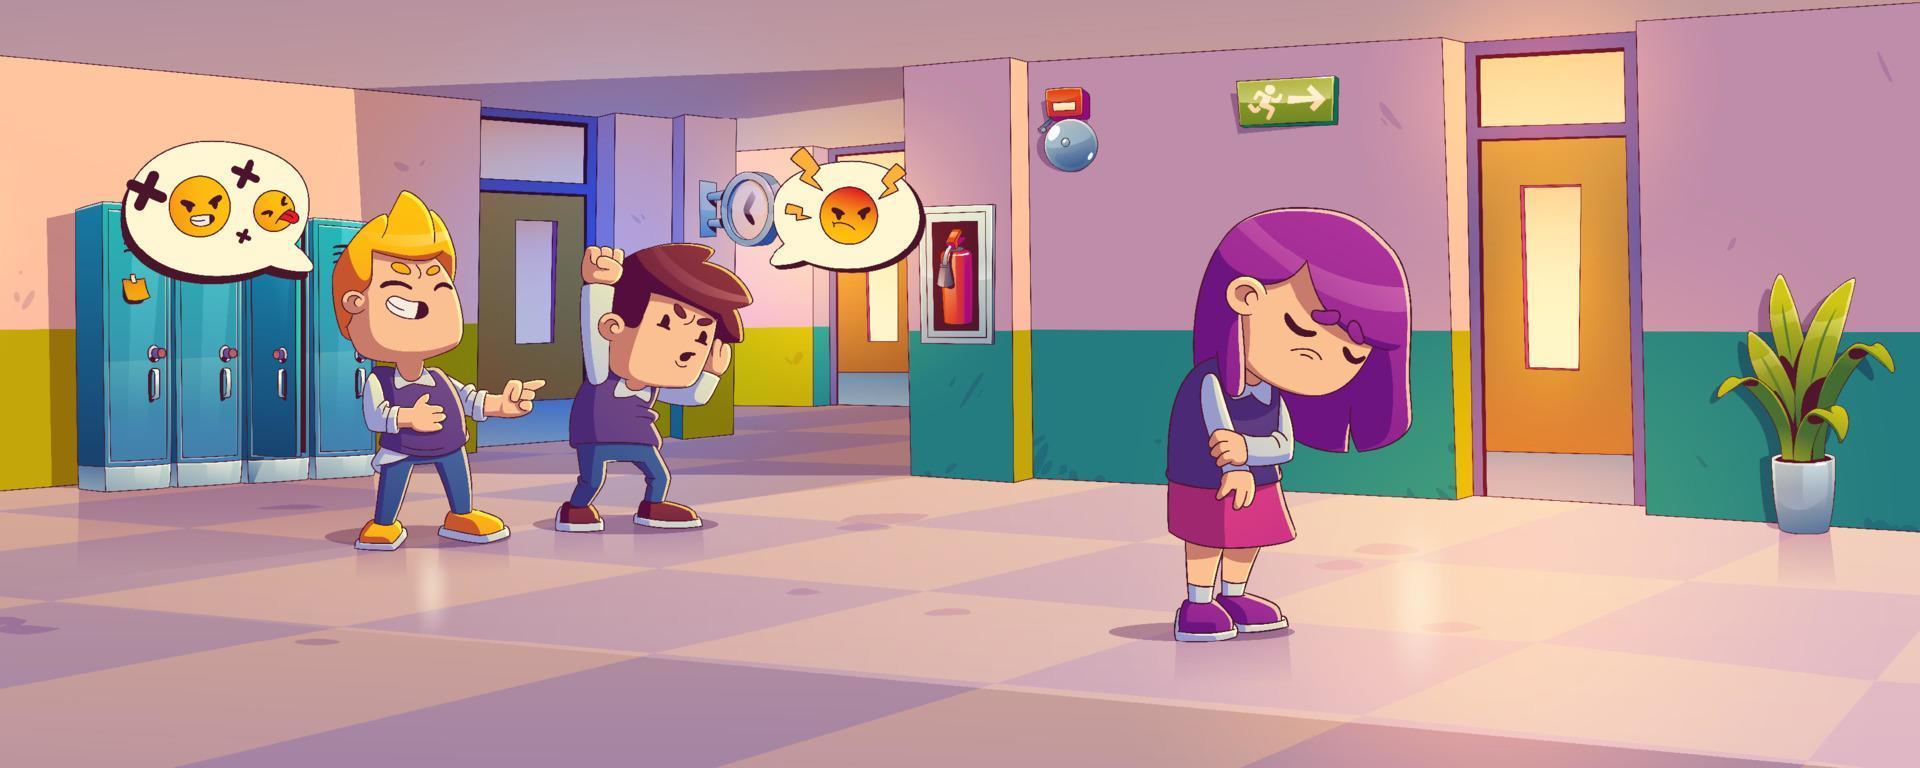 Boys bully girl in school hallway vector